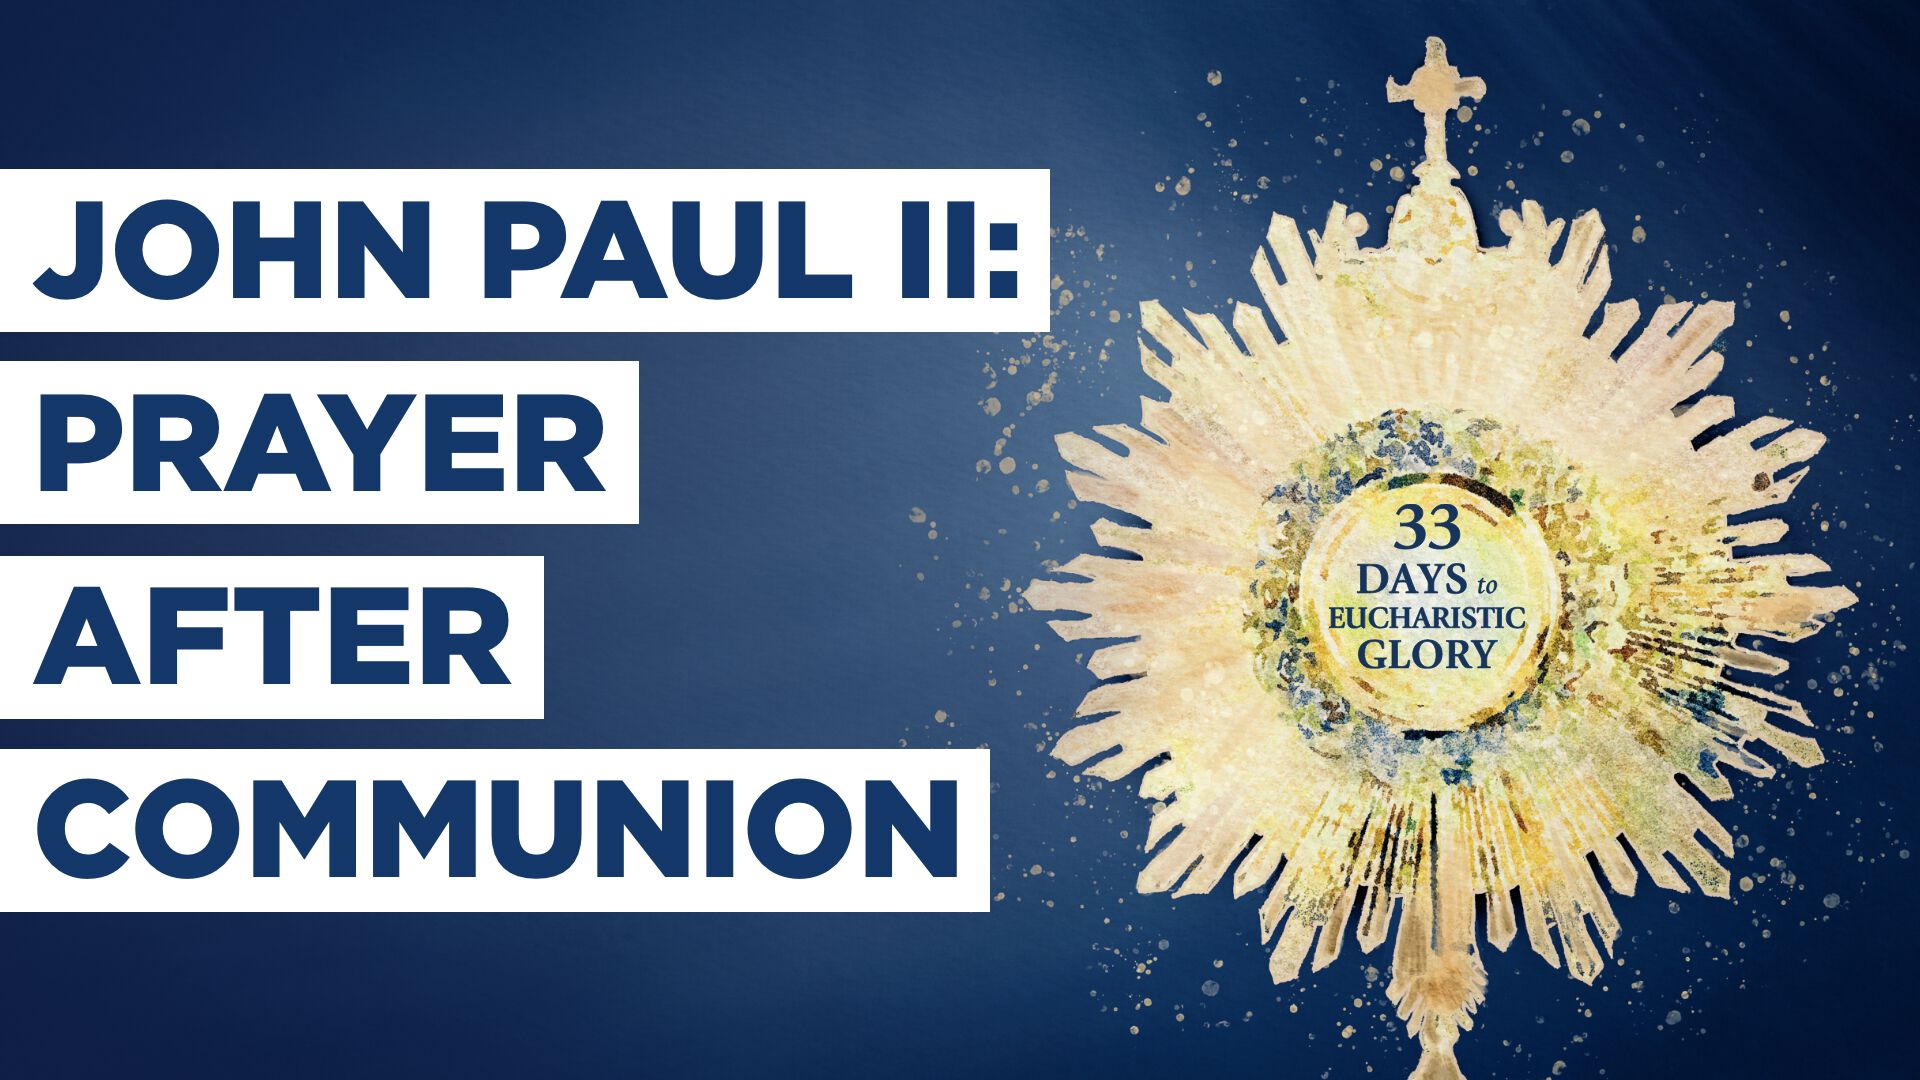 John Paul II: Prayer After Communion